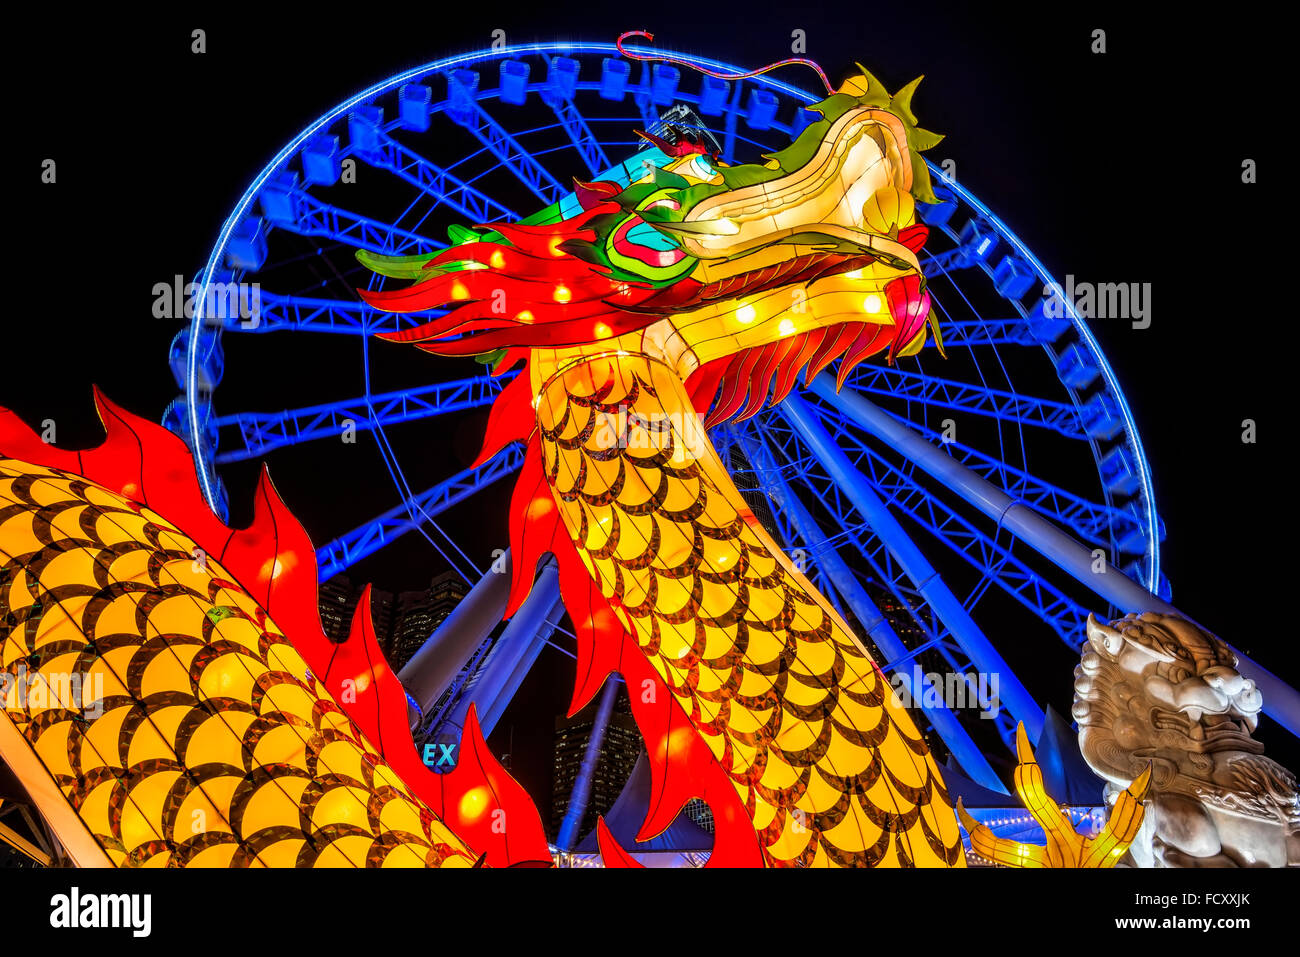 Chinese new year dragon 2016, and the observation wheel, Victoria harbor, Hong Kong, China. Stock Photo